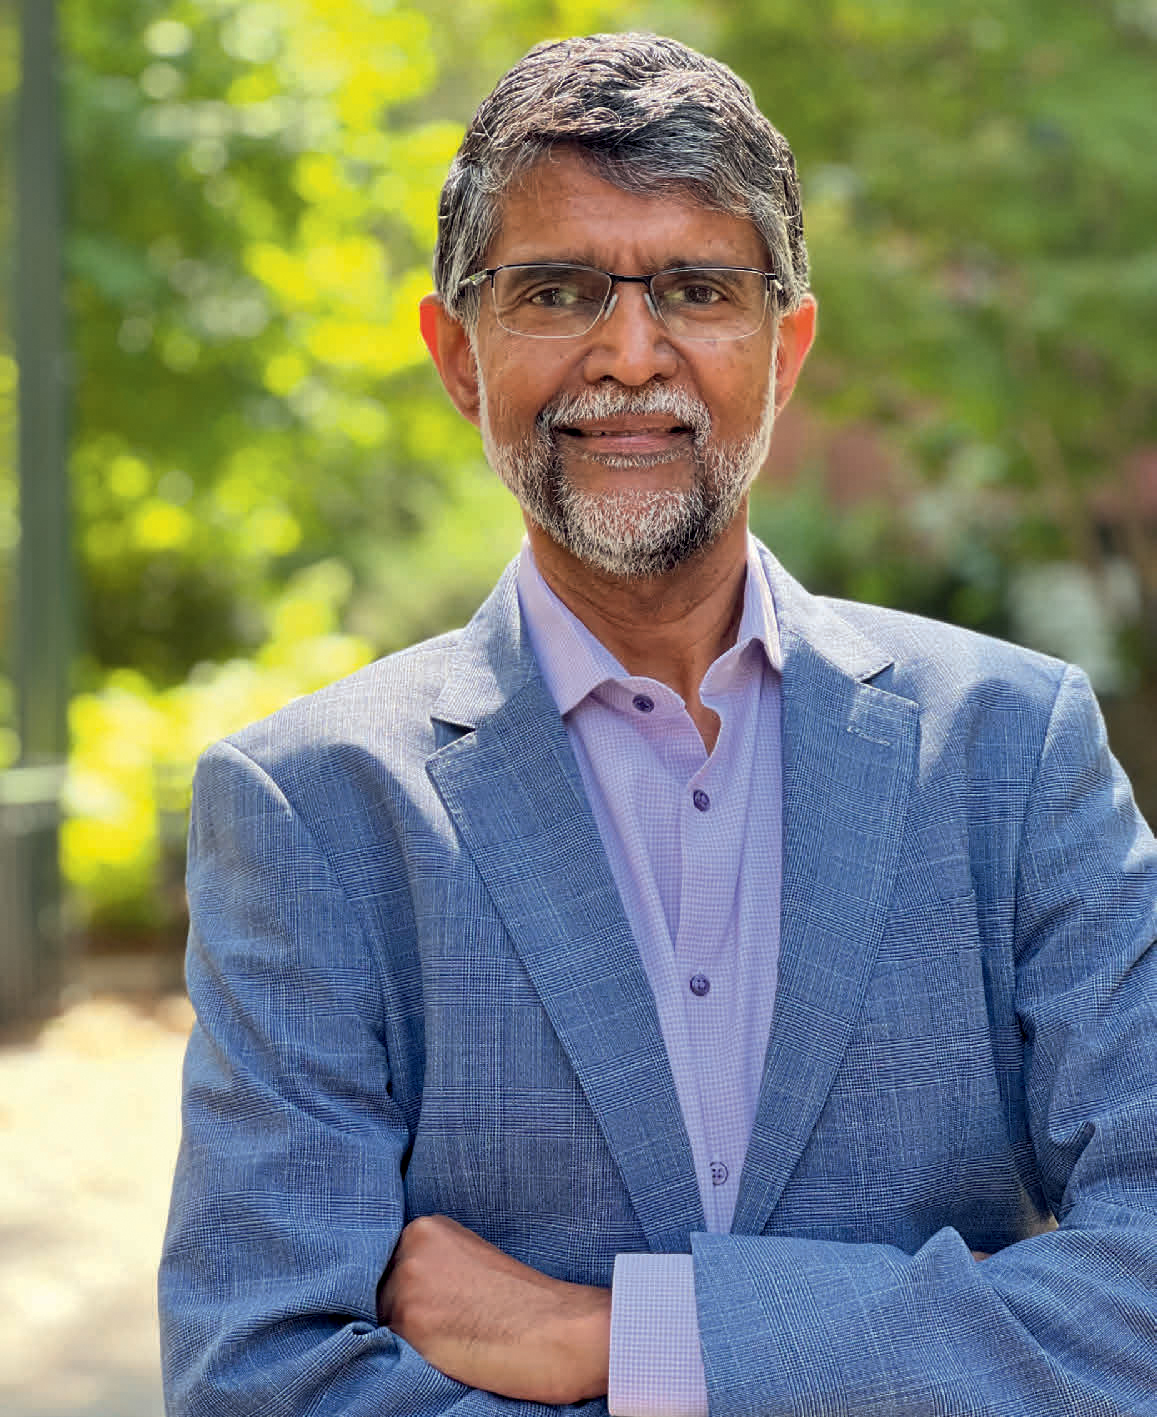 Penn Engineering Dean Vijay Kumar